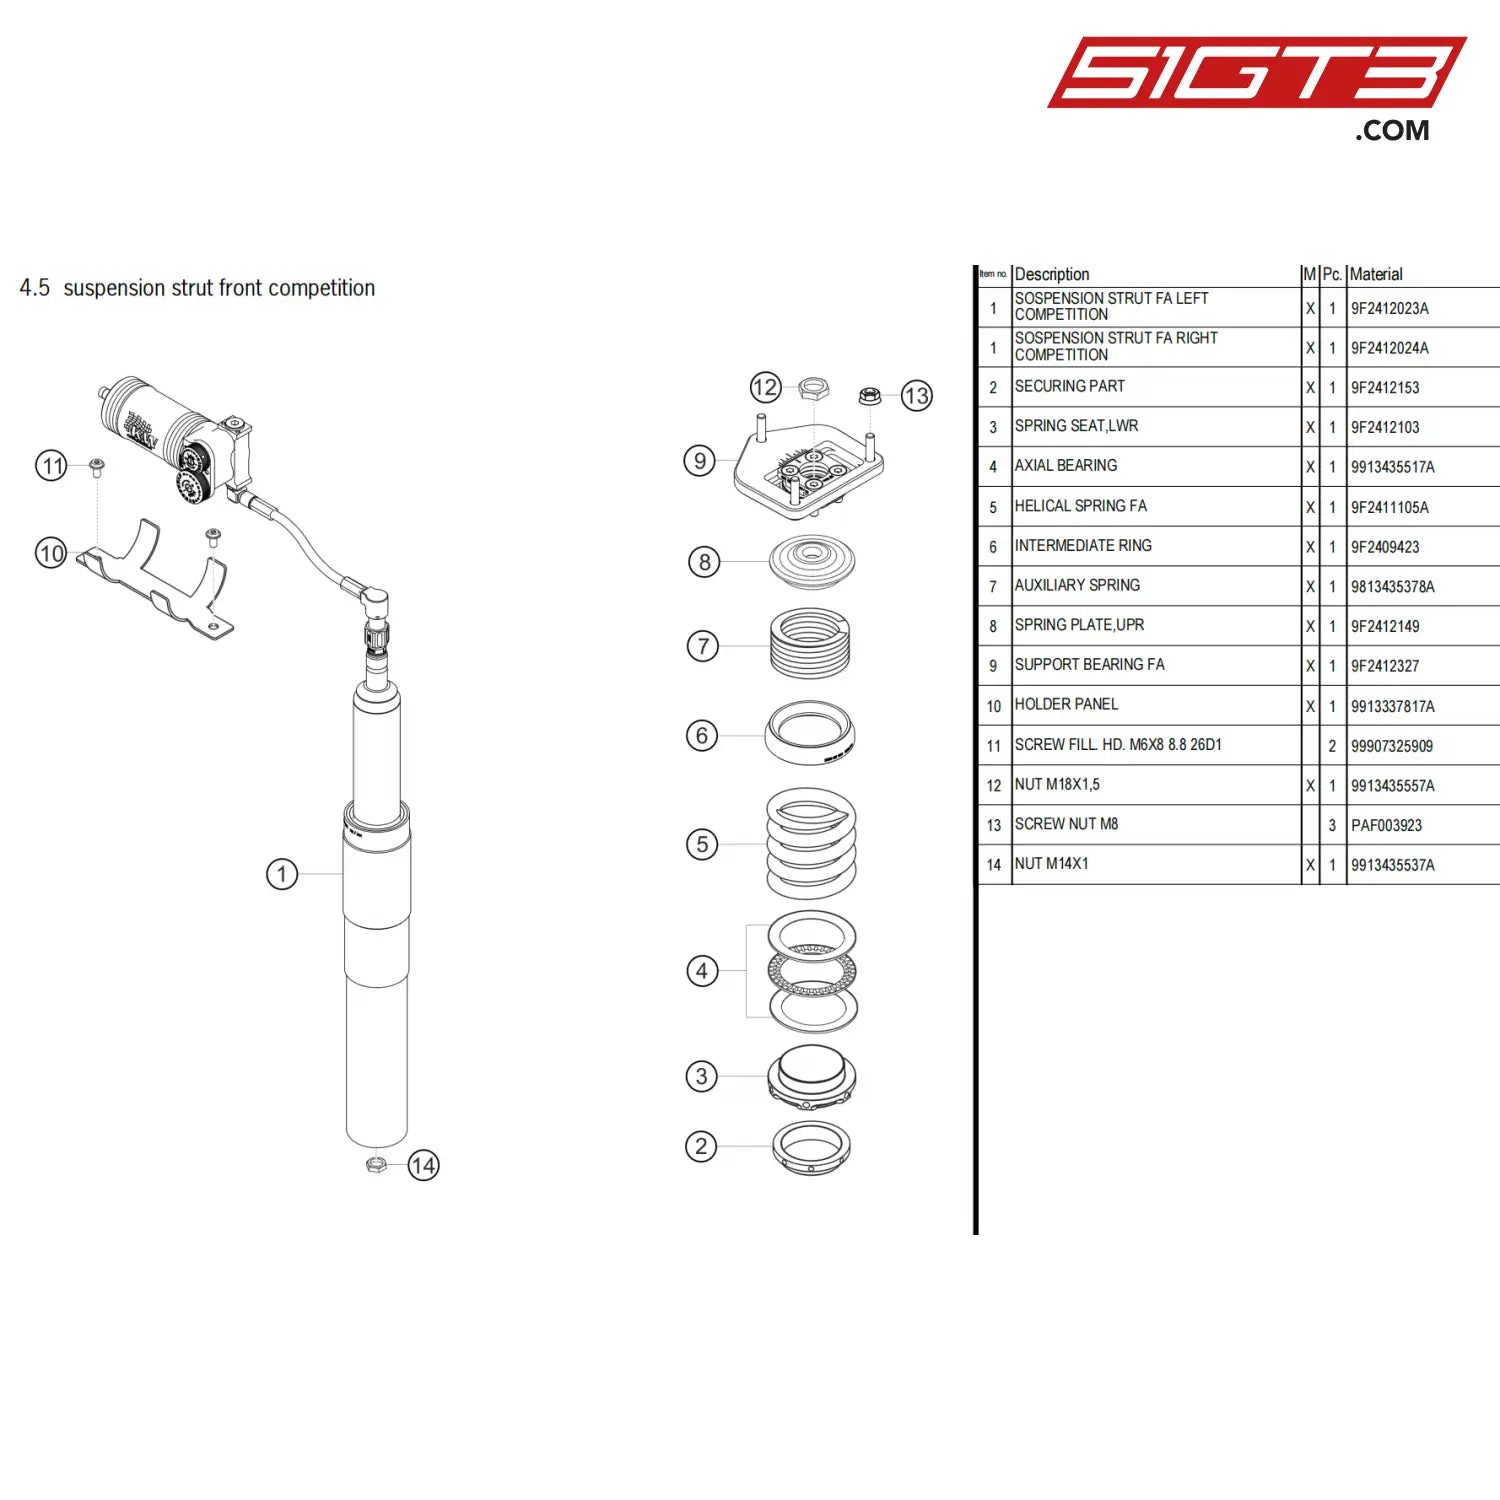 Sospension Strut Fa Right Competition - 9F2412024A [Porsche 718 Cayman Gt4 Clubsport] Suspension